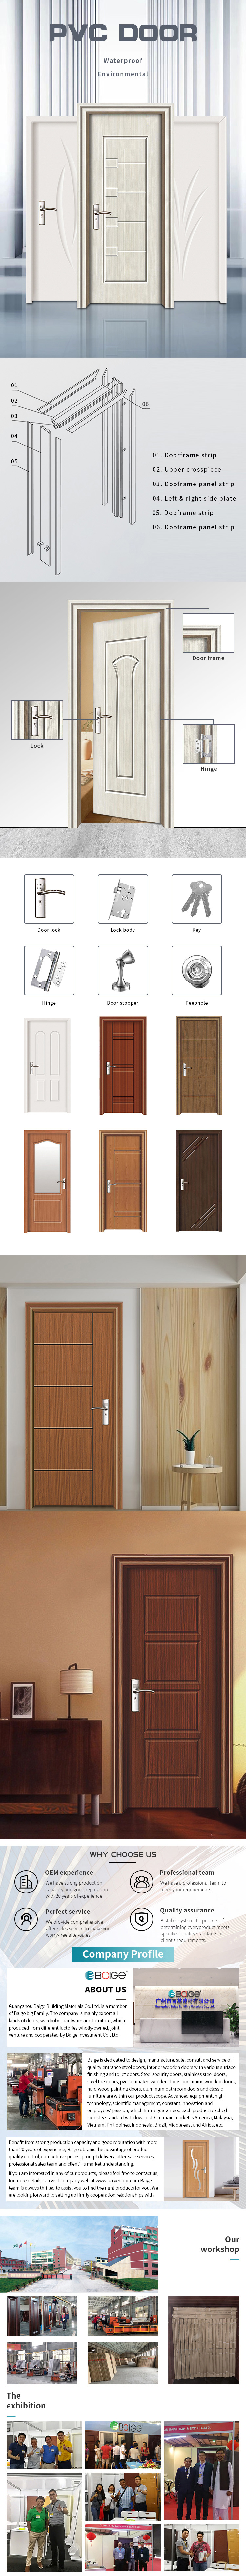 French Craft PVC Door Wood Frosted Glass Interior Door